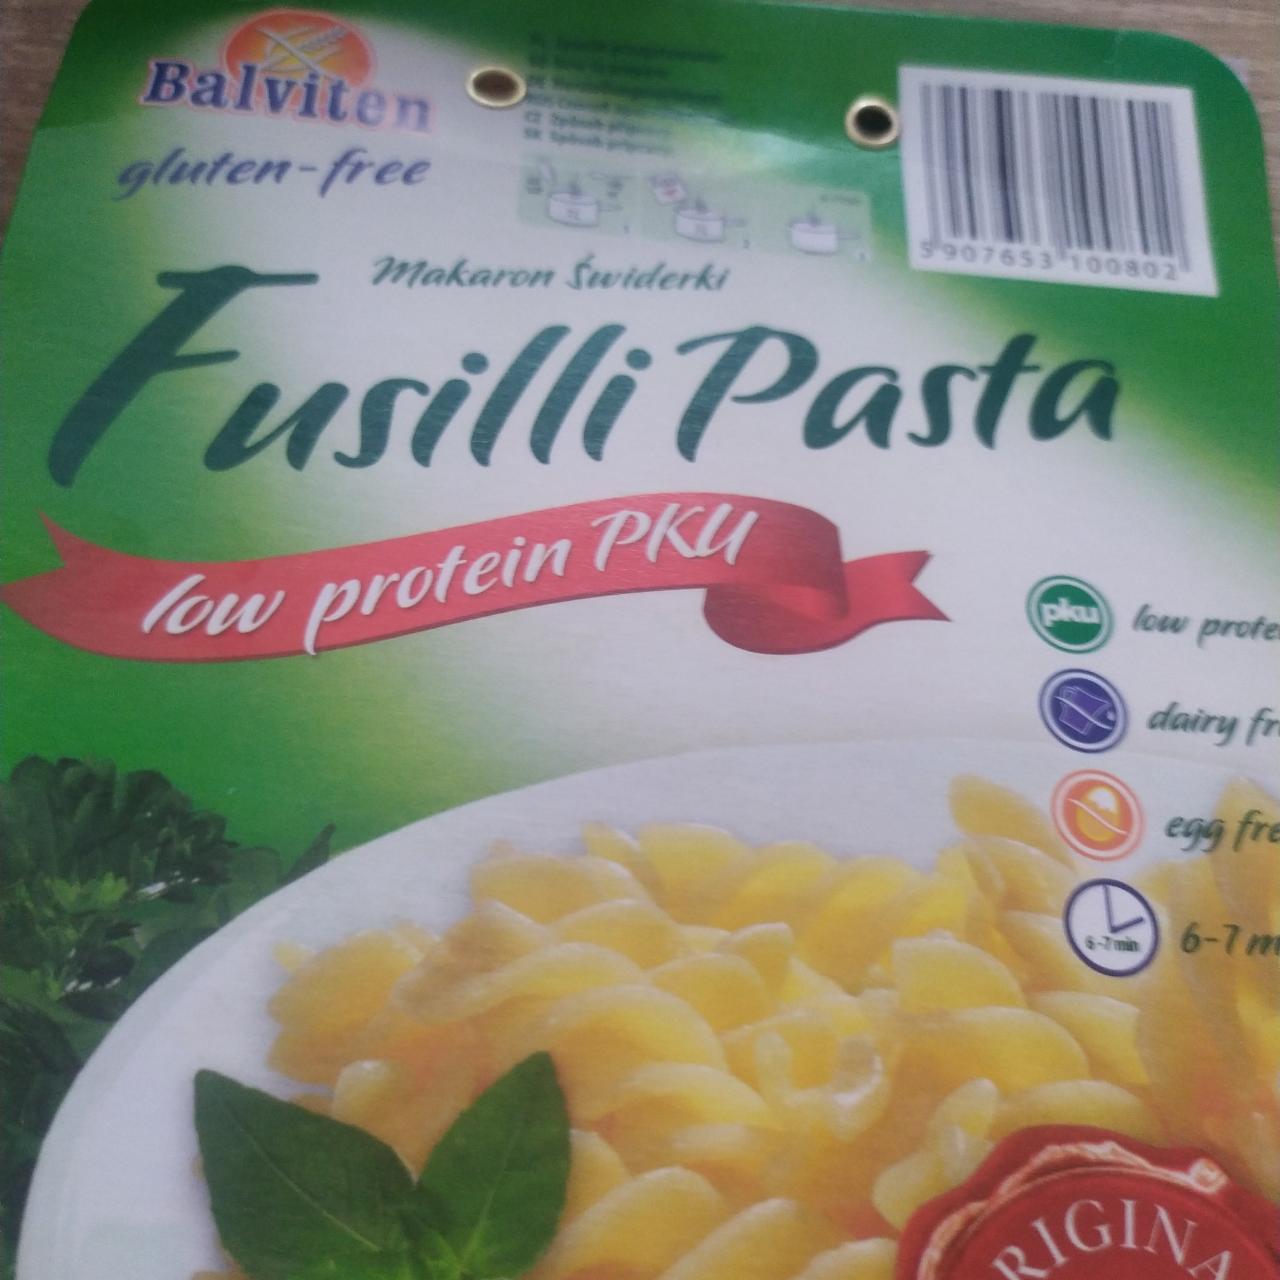 Fotografie - Fusilli Pasta low protein PKU Balviten